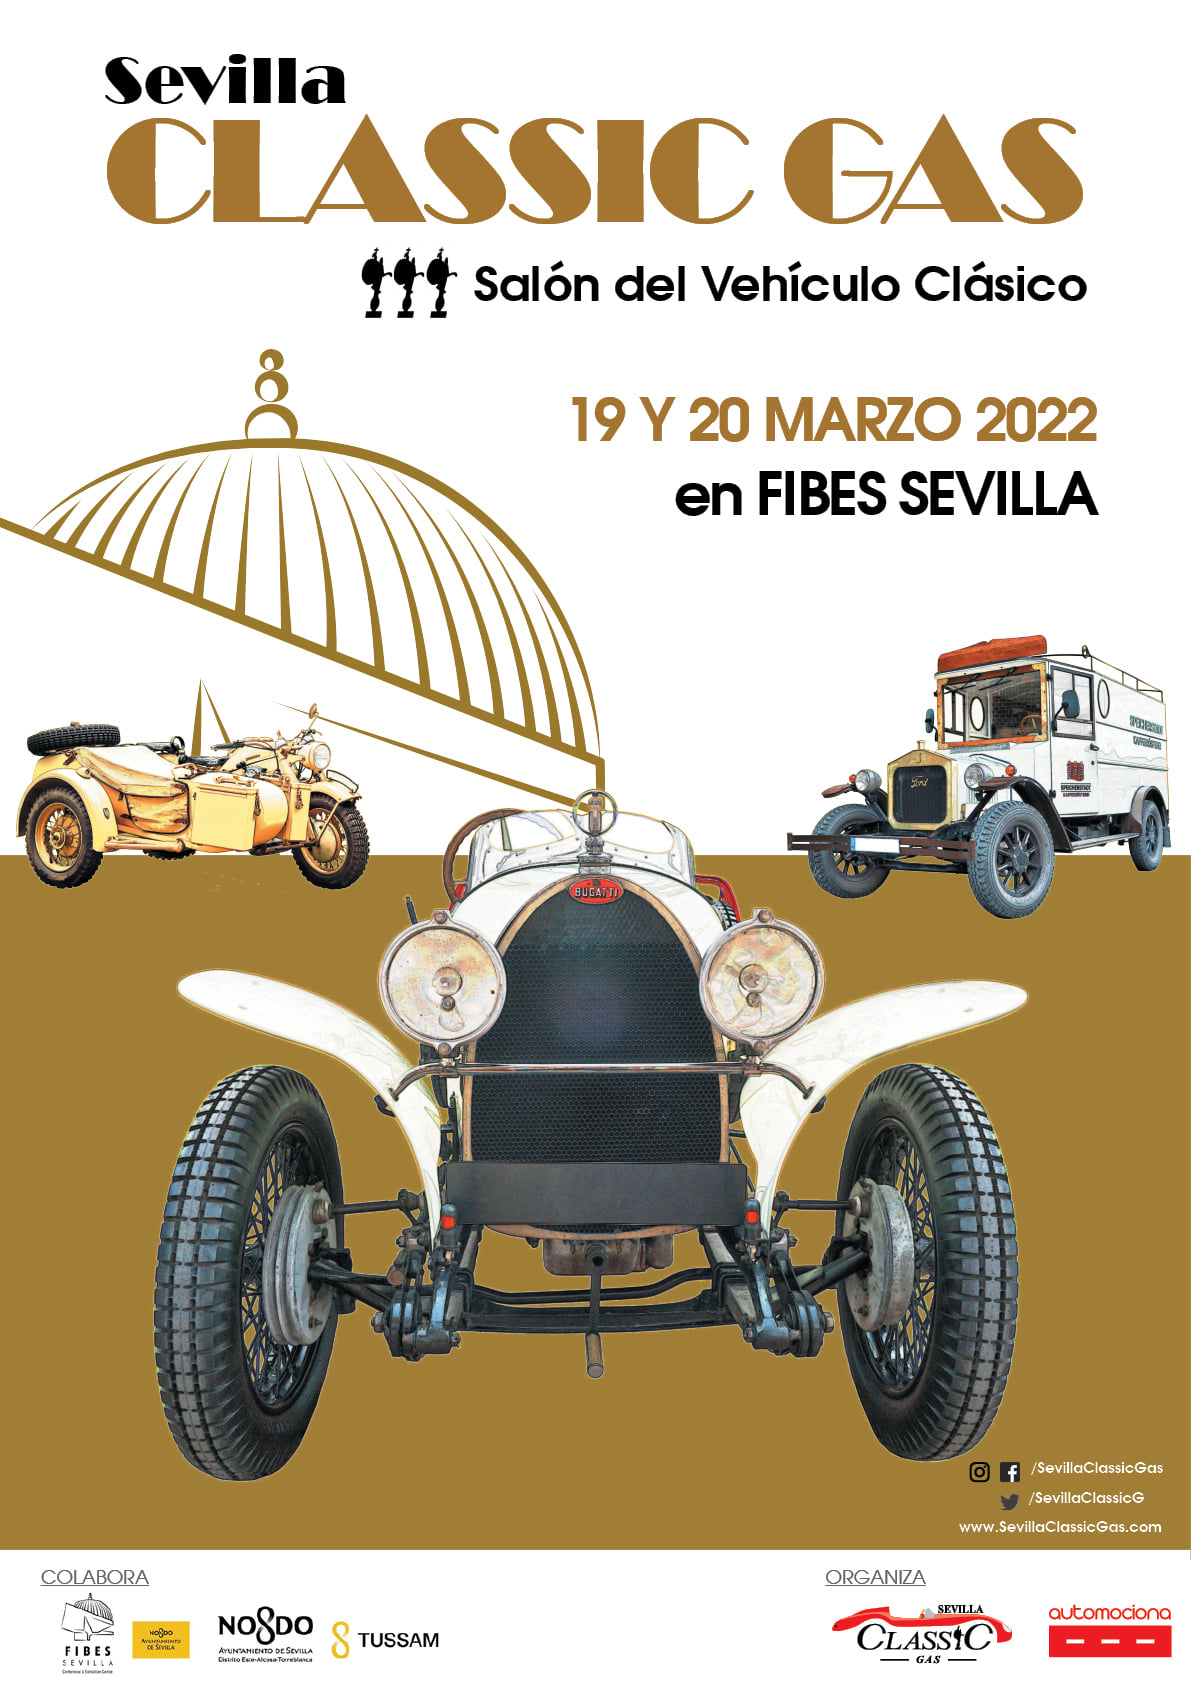 III Sevilla Classic Gas